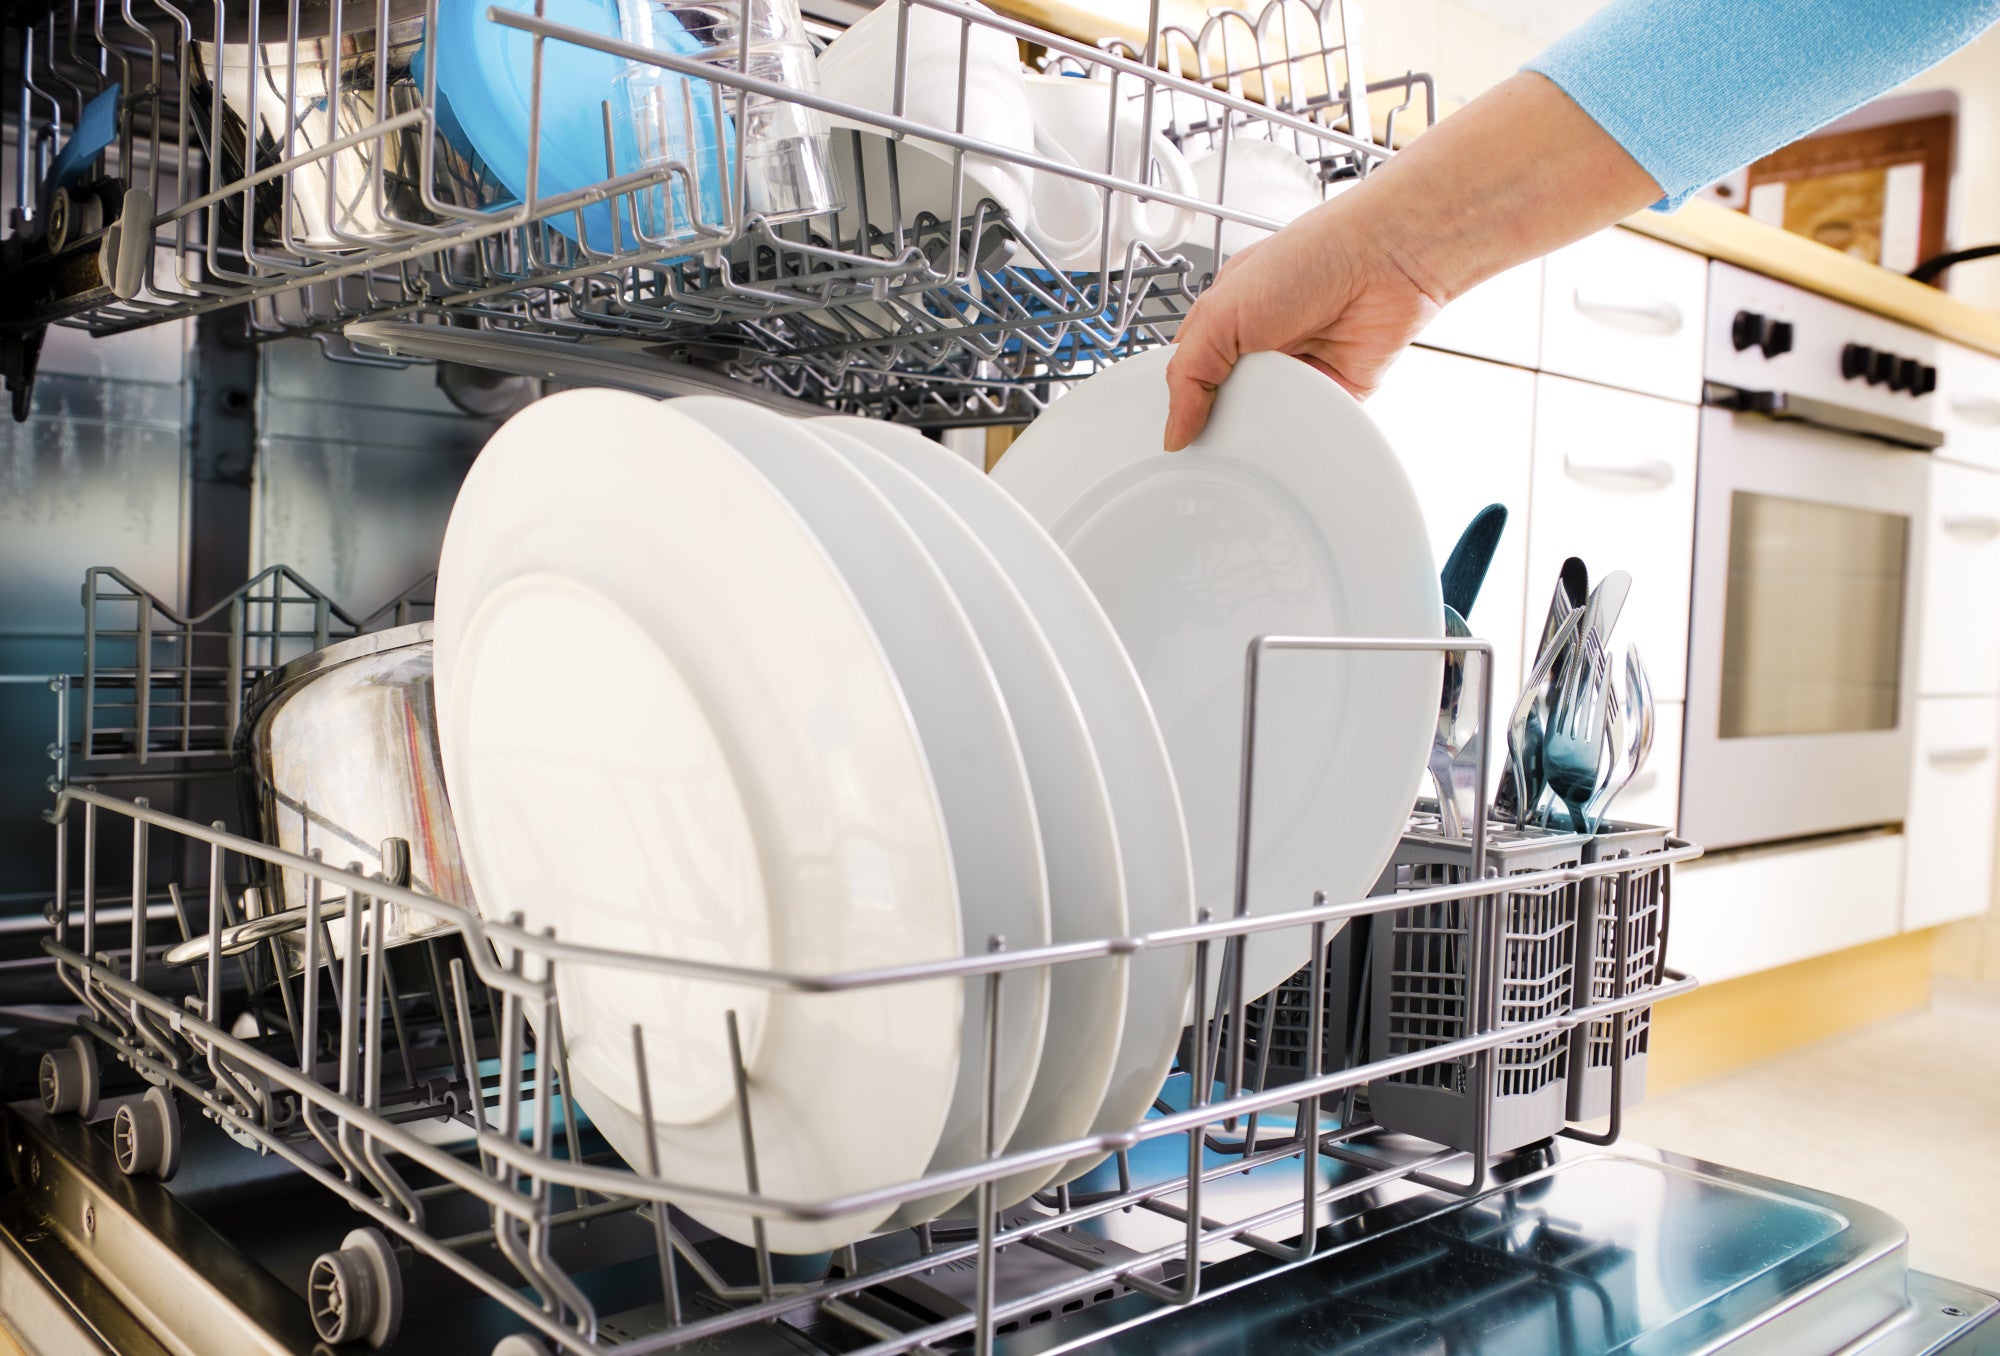 8 Best Tips for Loading a Dishwasher